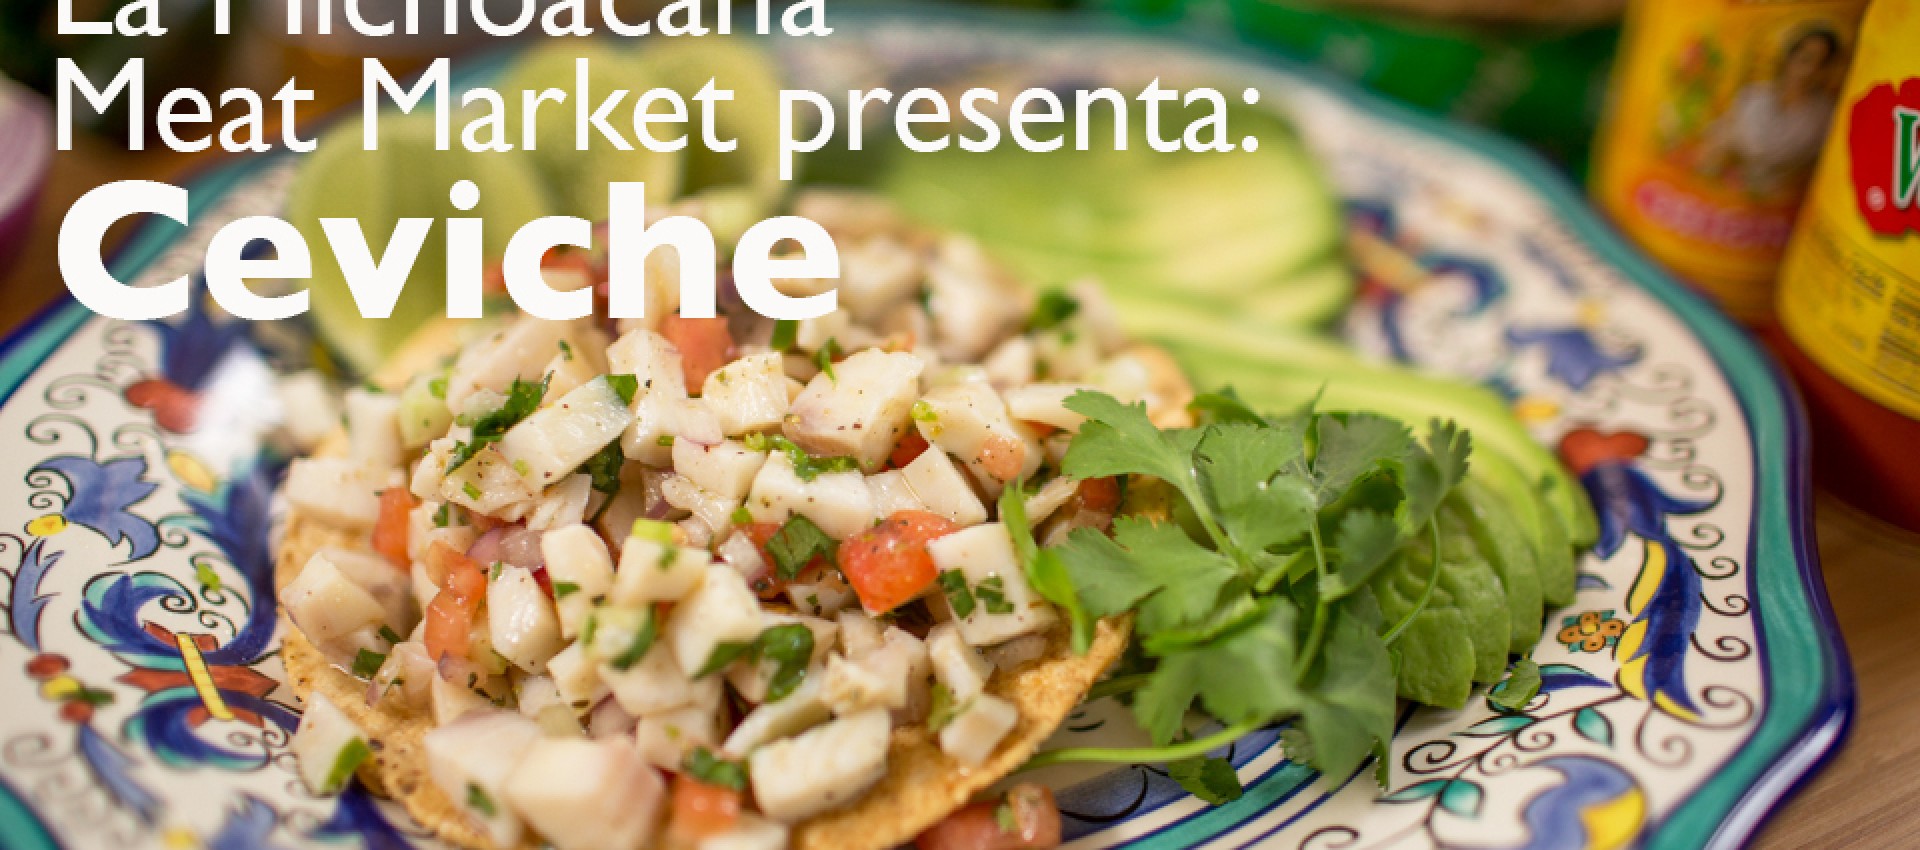 Receta de Ceviche Mexicano - La Michocana Meat Market